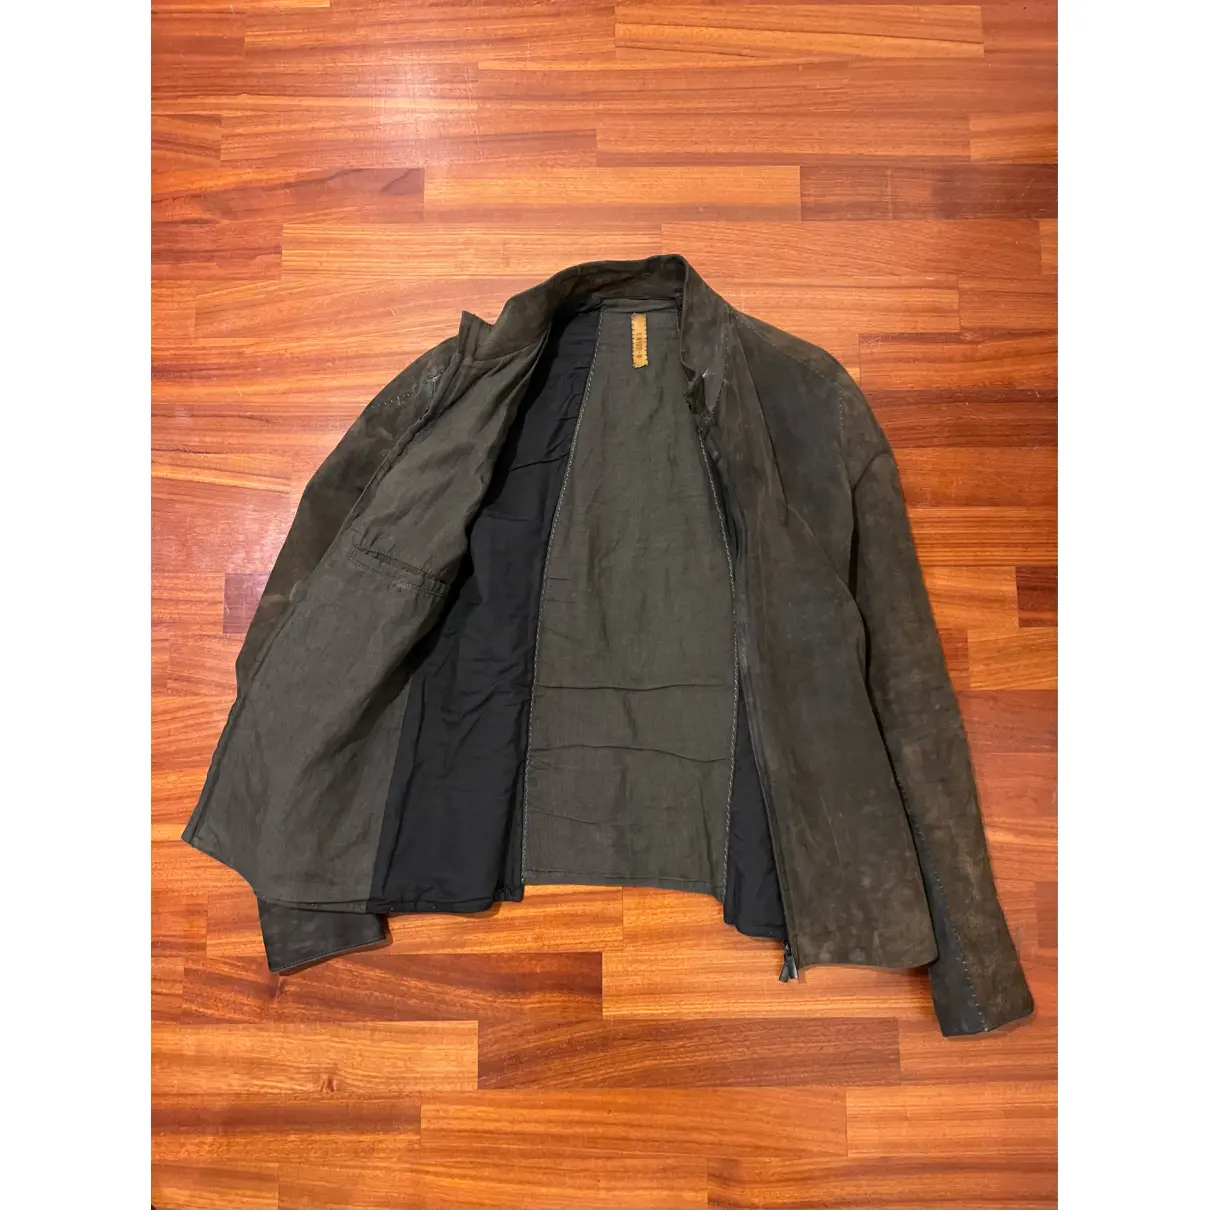 Leather vest Layer-0